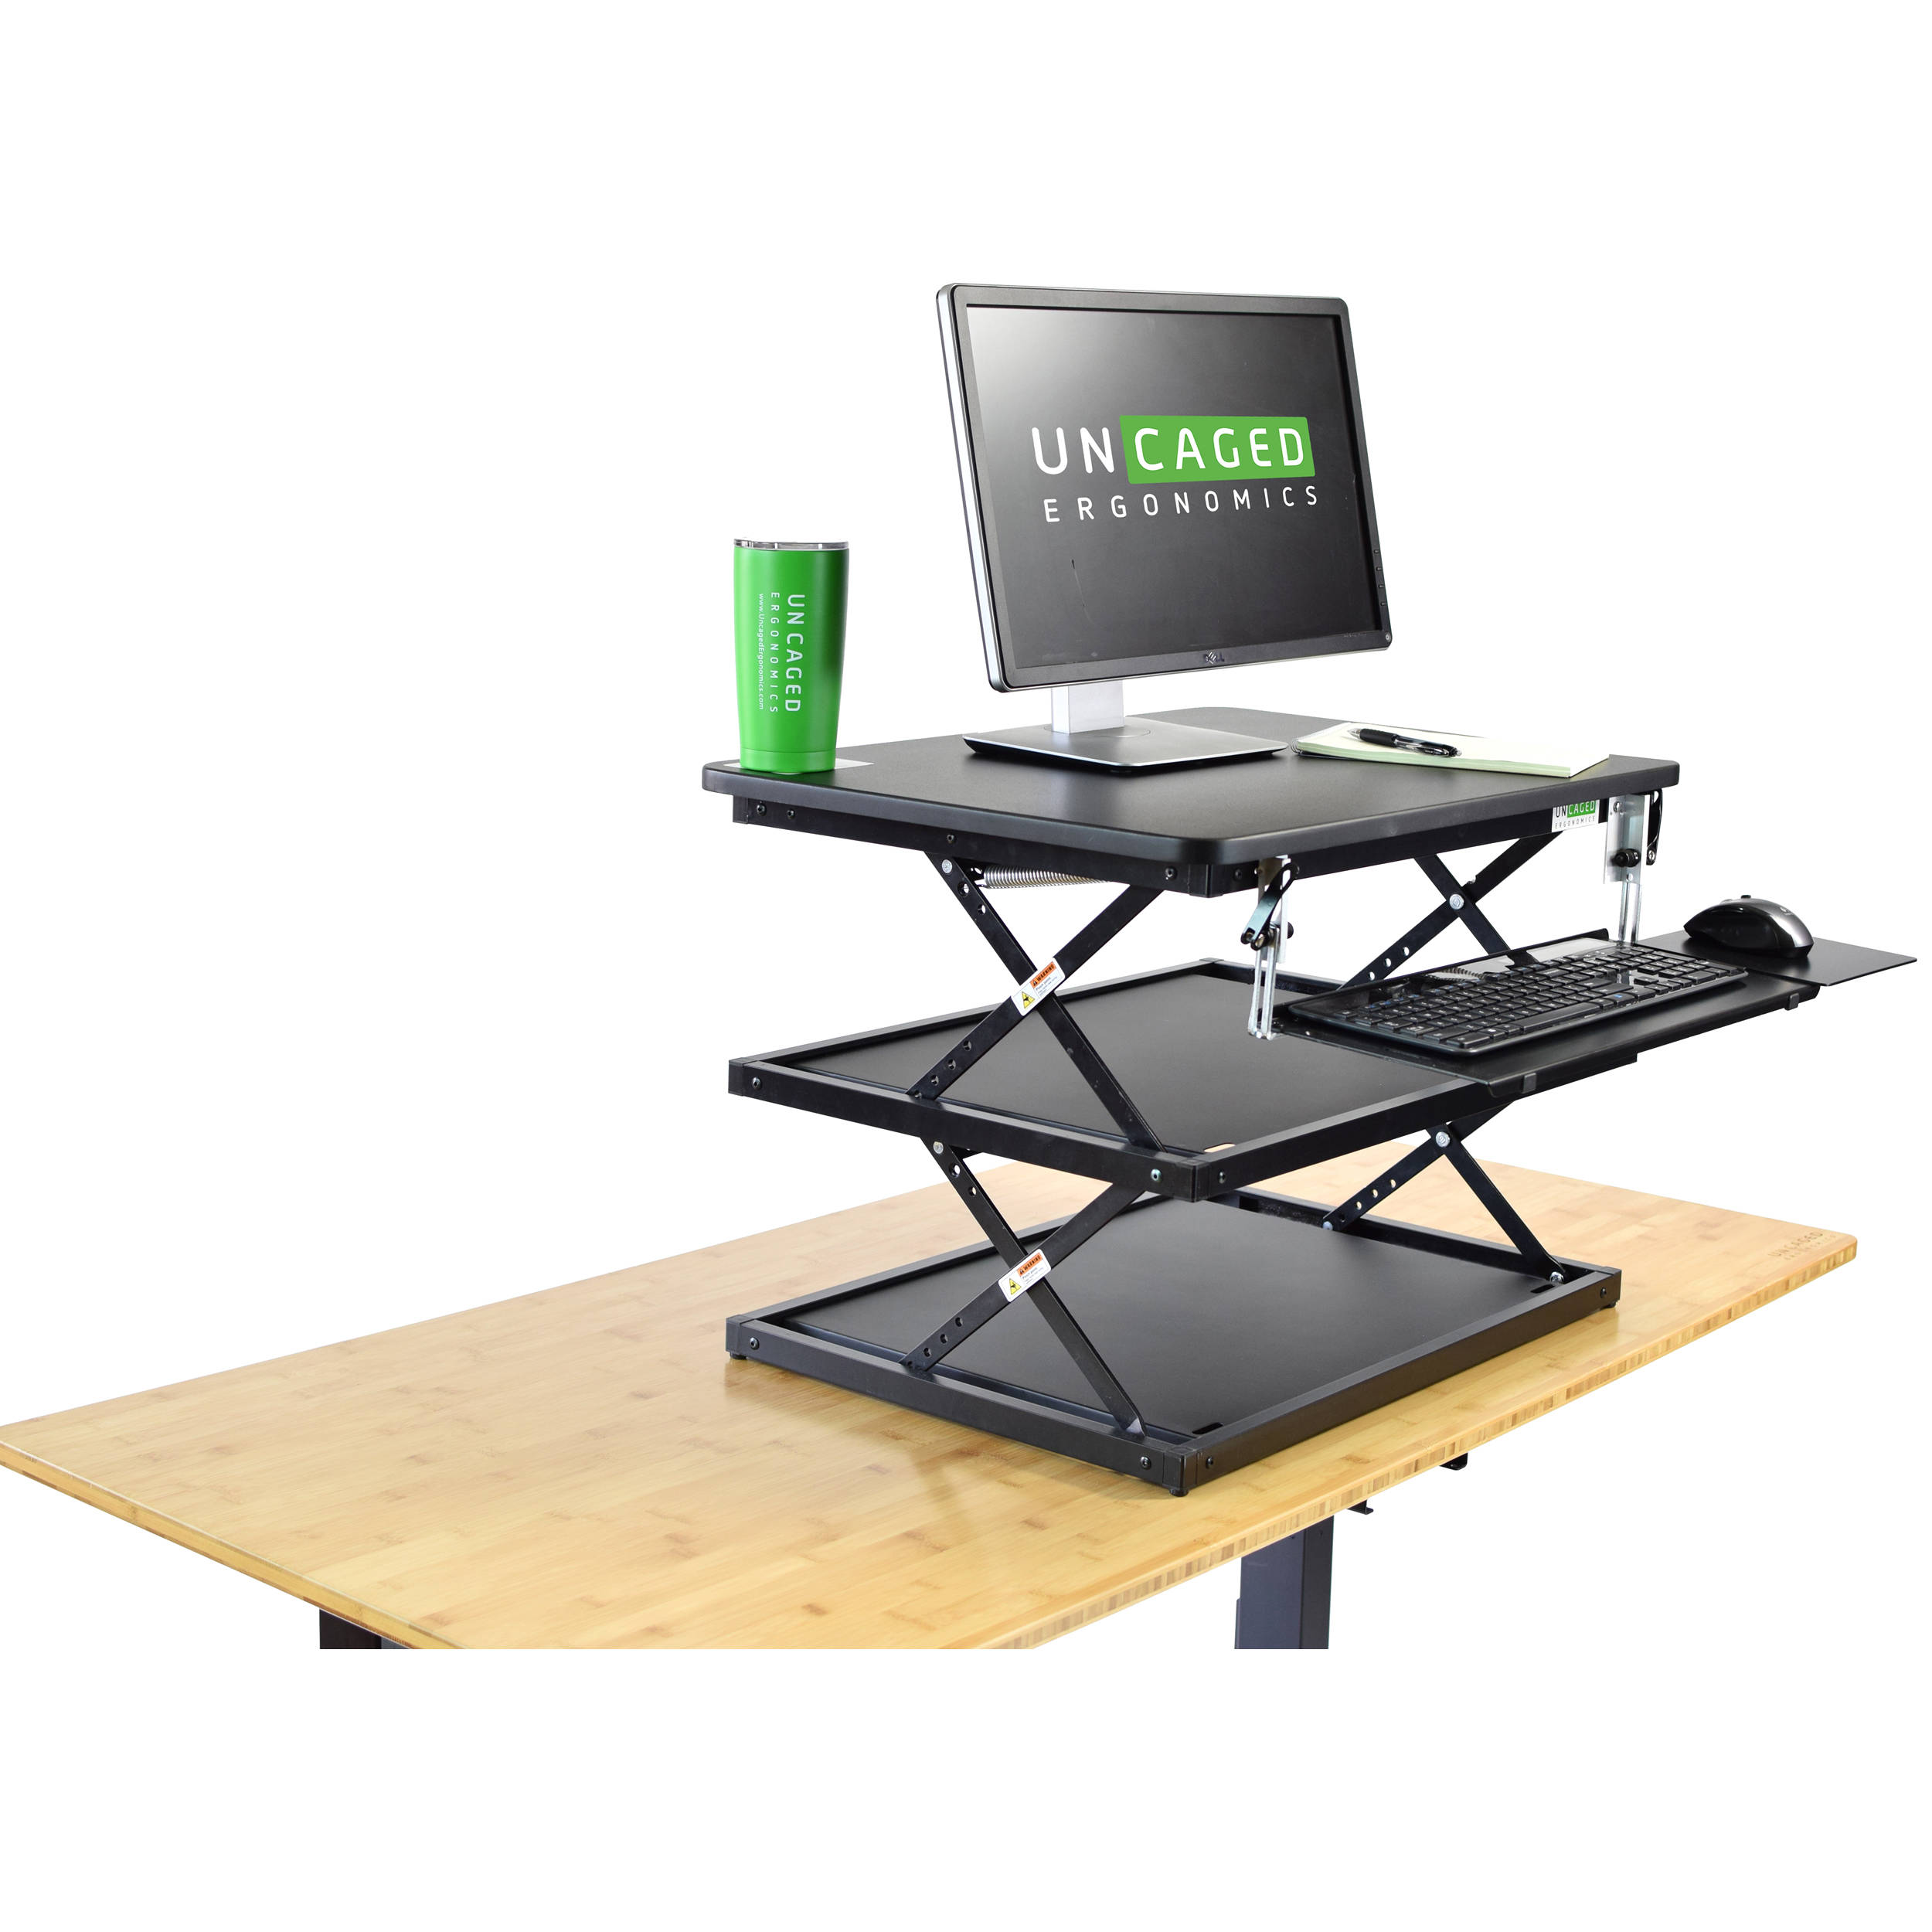 Uncaged Ergonomics Changedesk Tall Stand Up Desk Converter Cdm